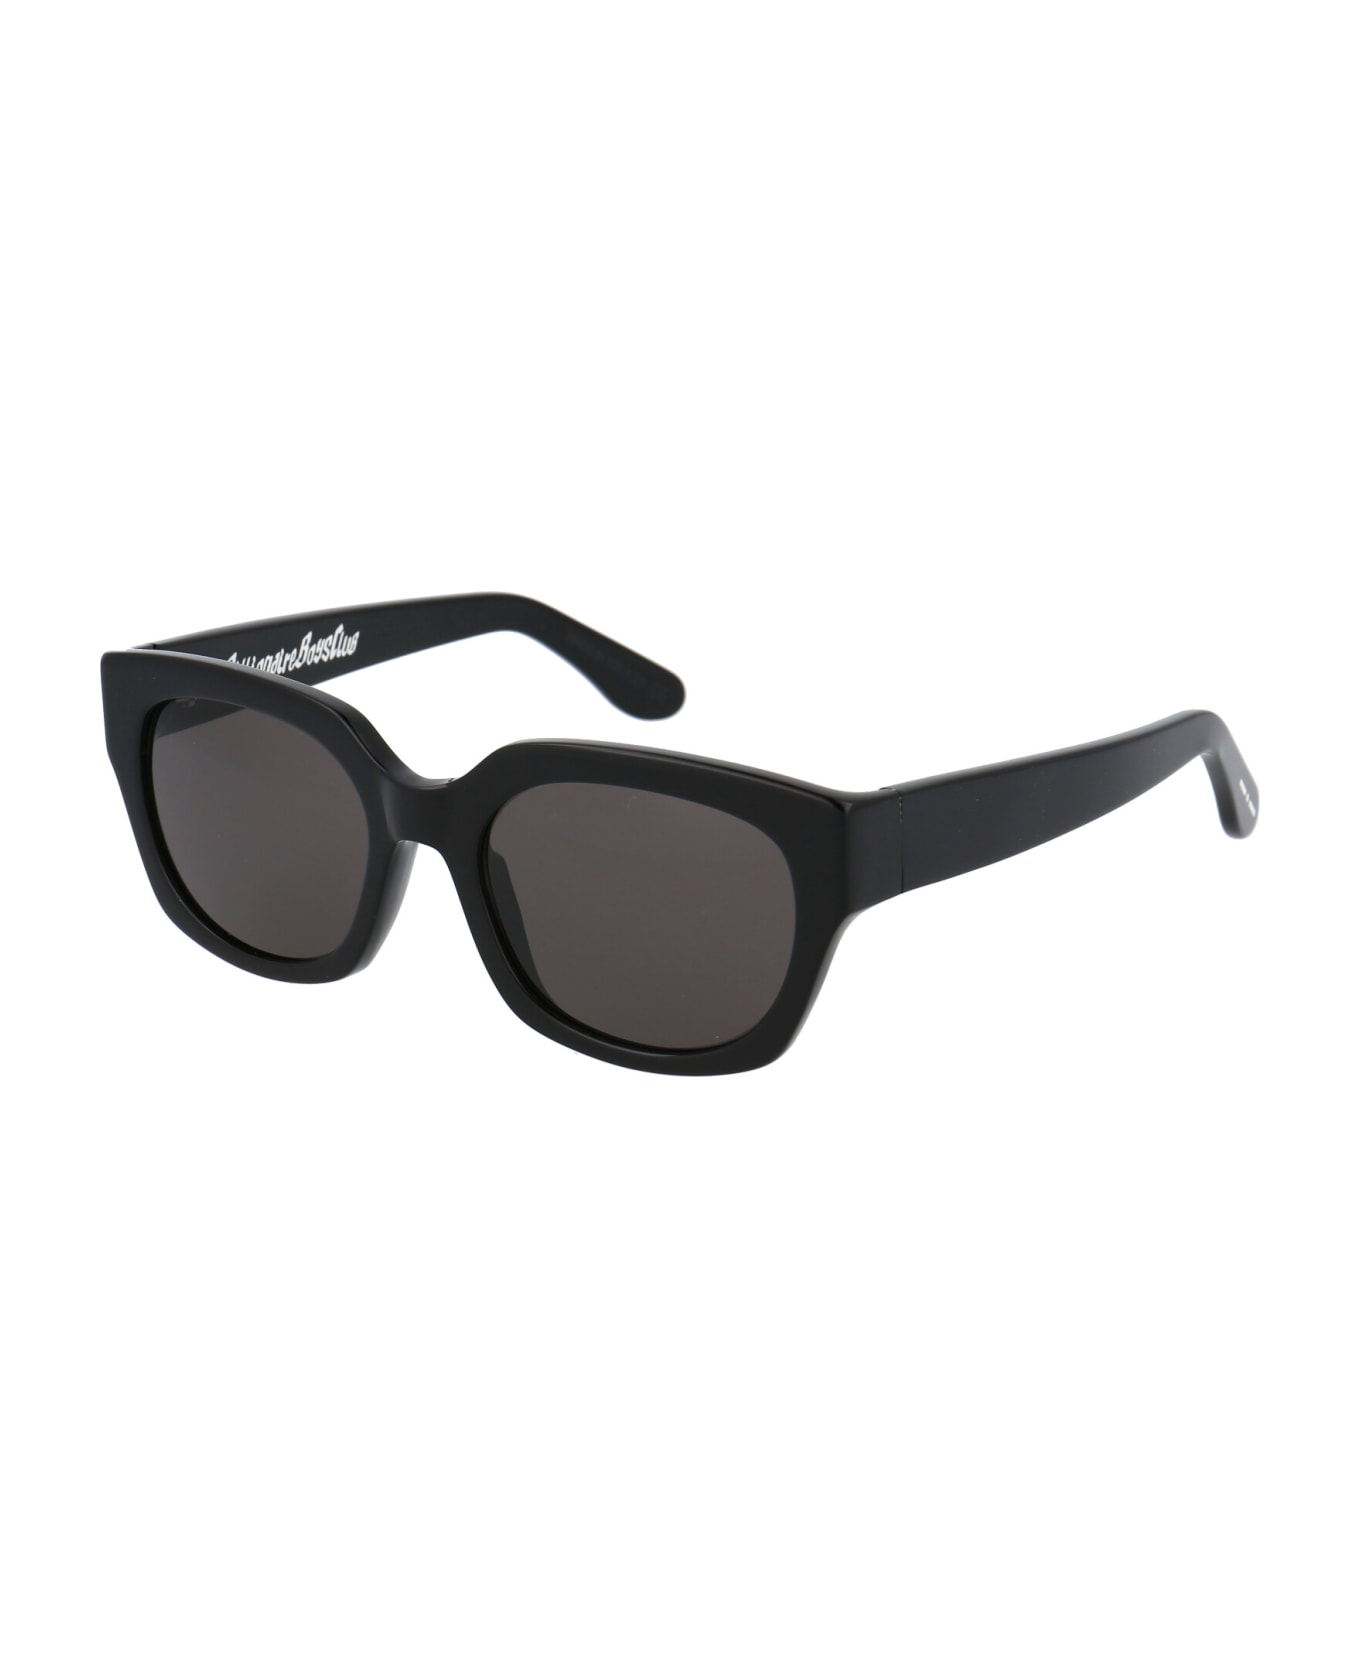 Billionaire Boys Club Bbc005 Sunglasses lasry - 009 BLACK